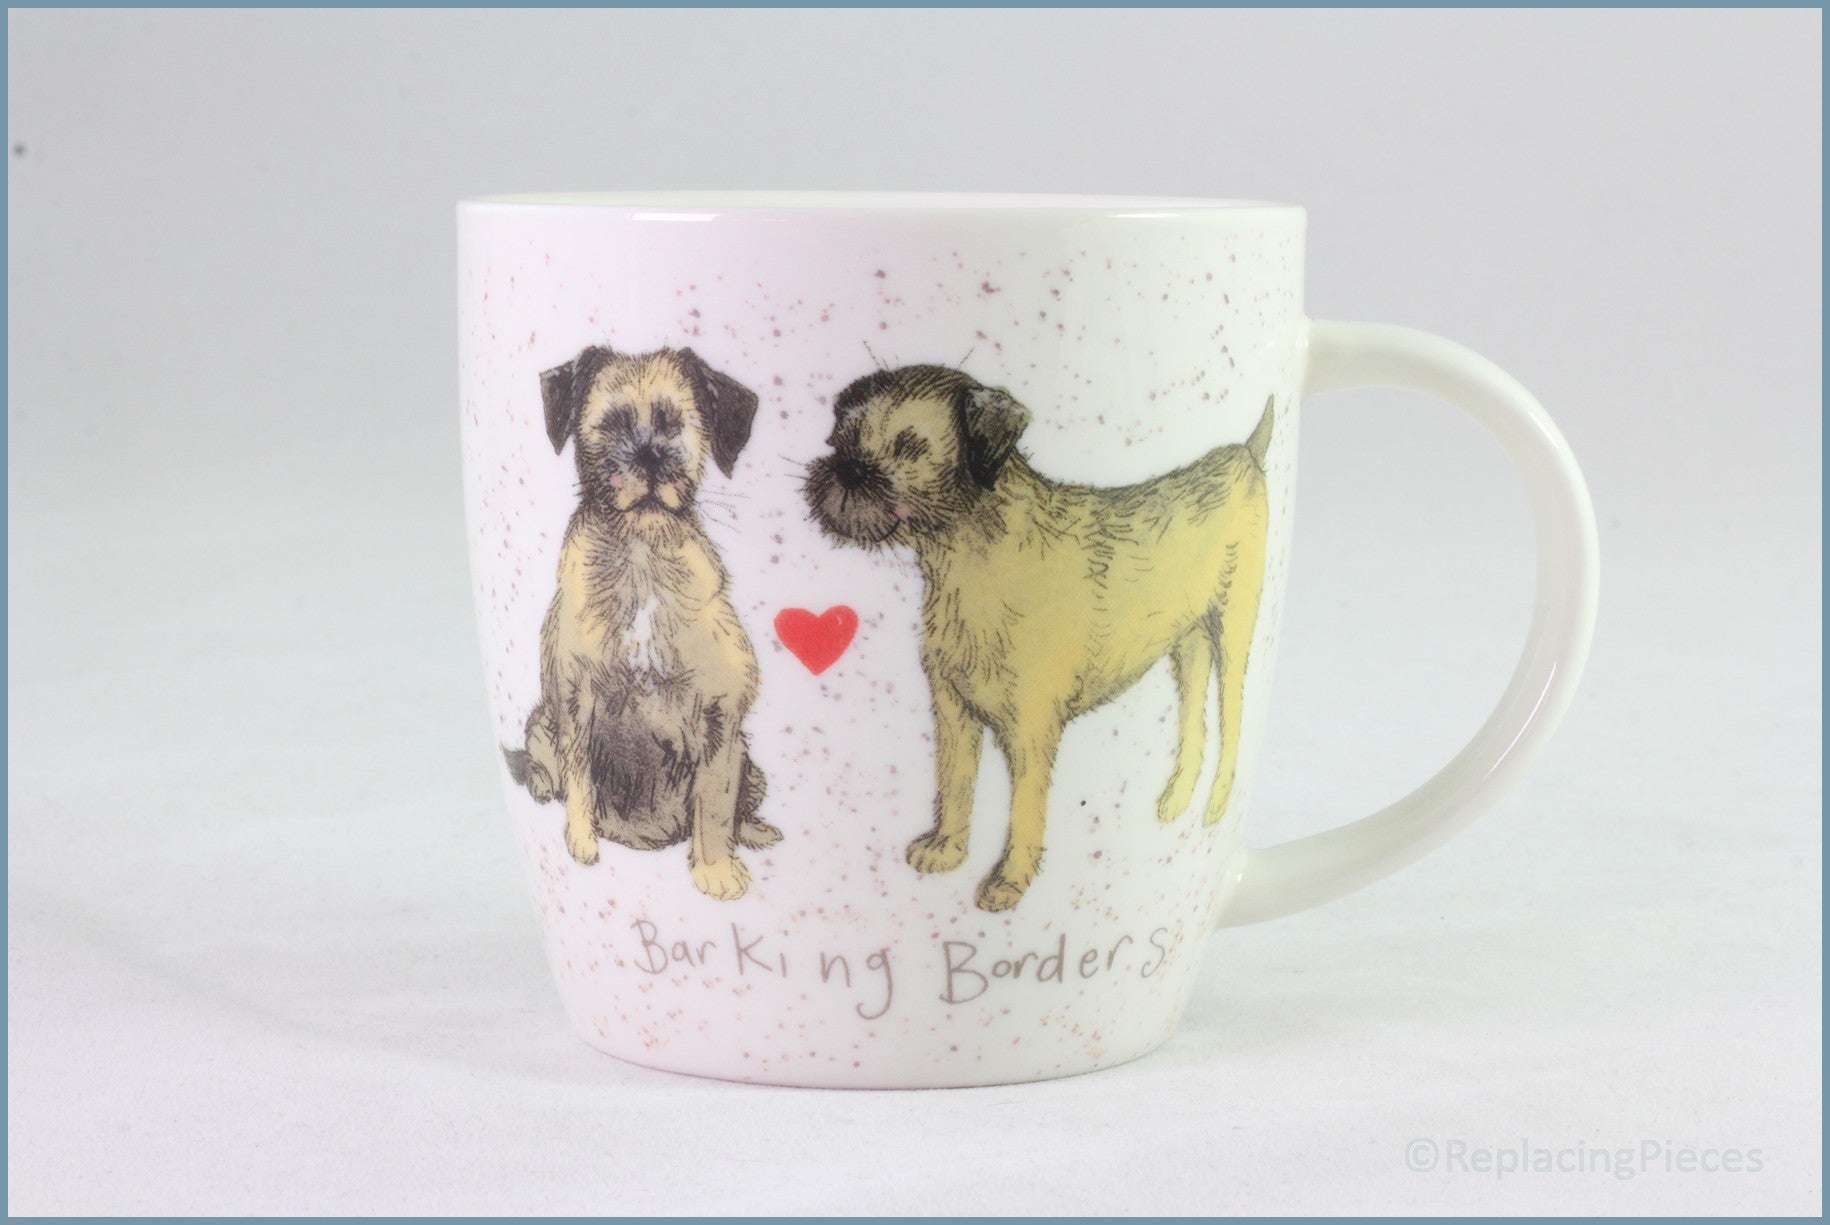 Queens - Delightful Dogs - Mug (Barking Borders)